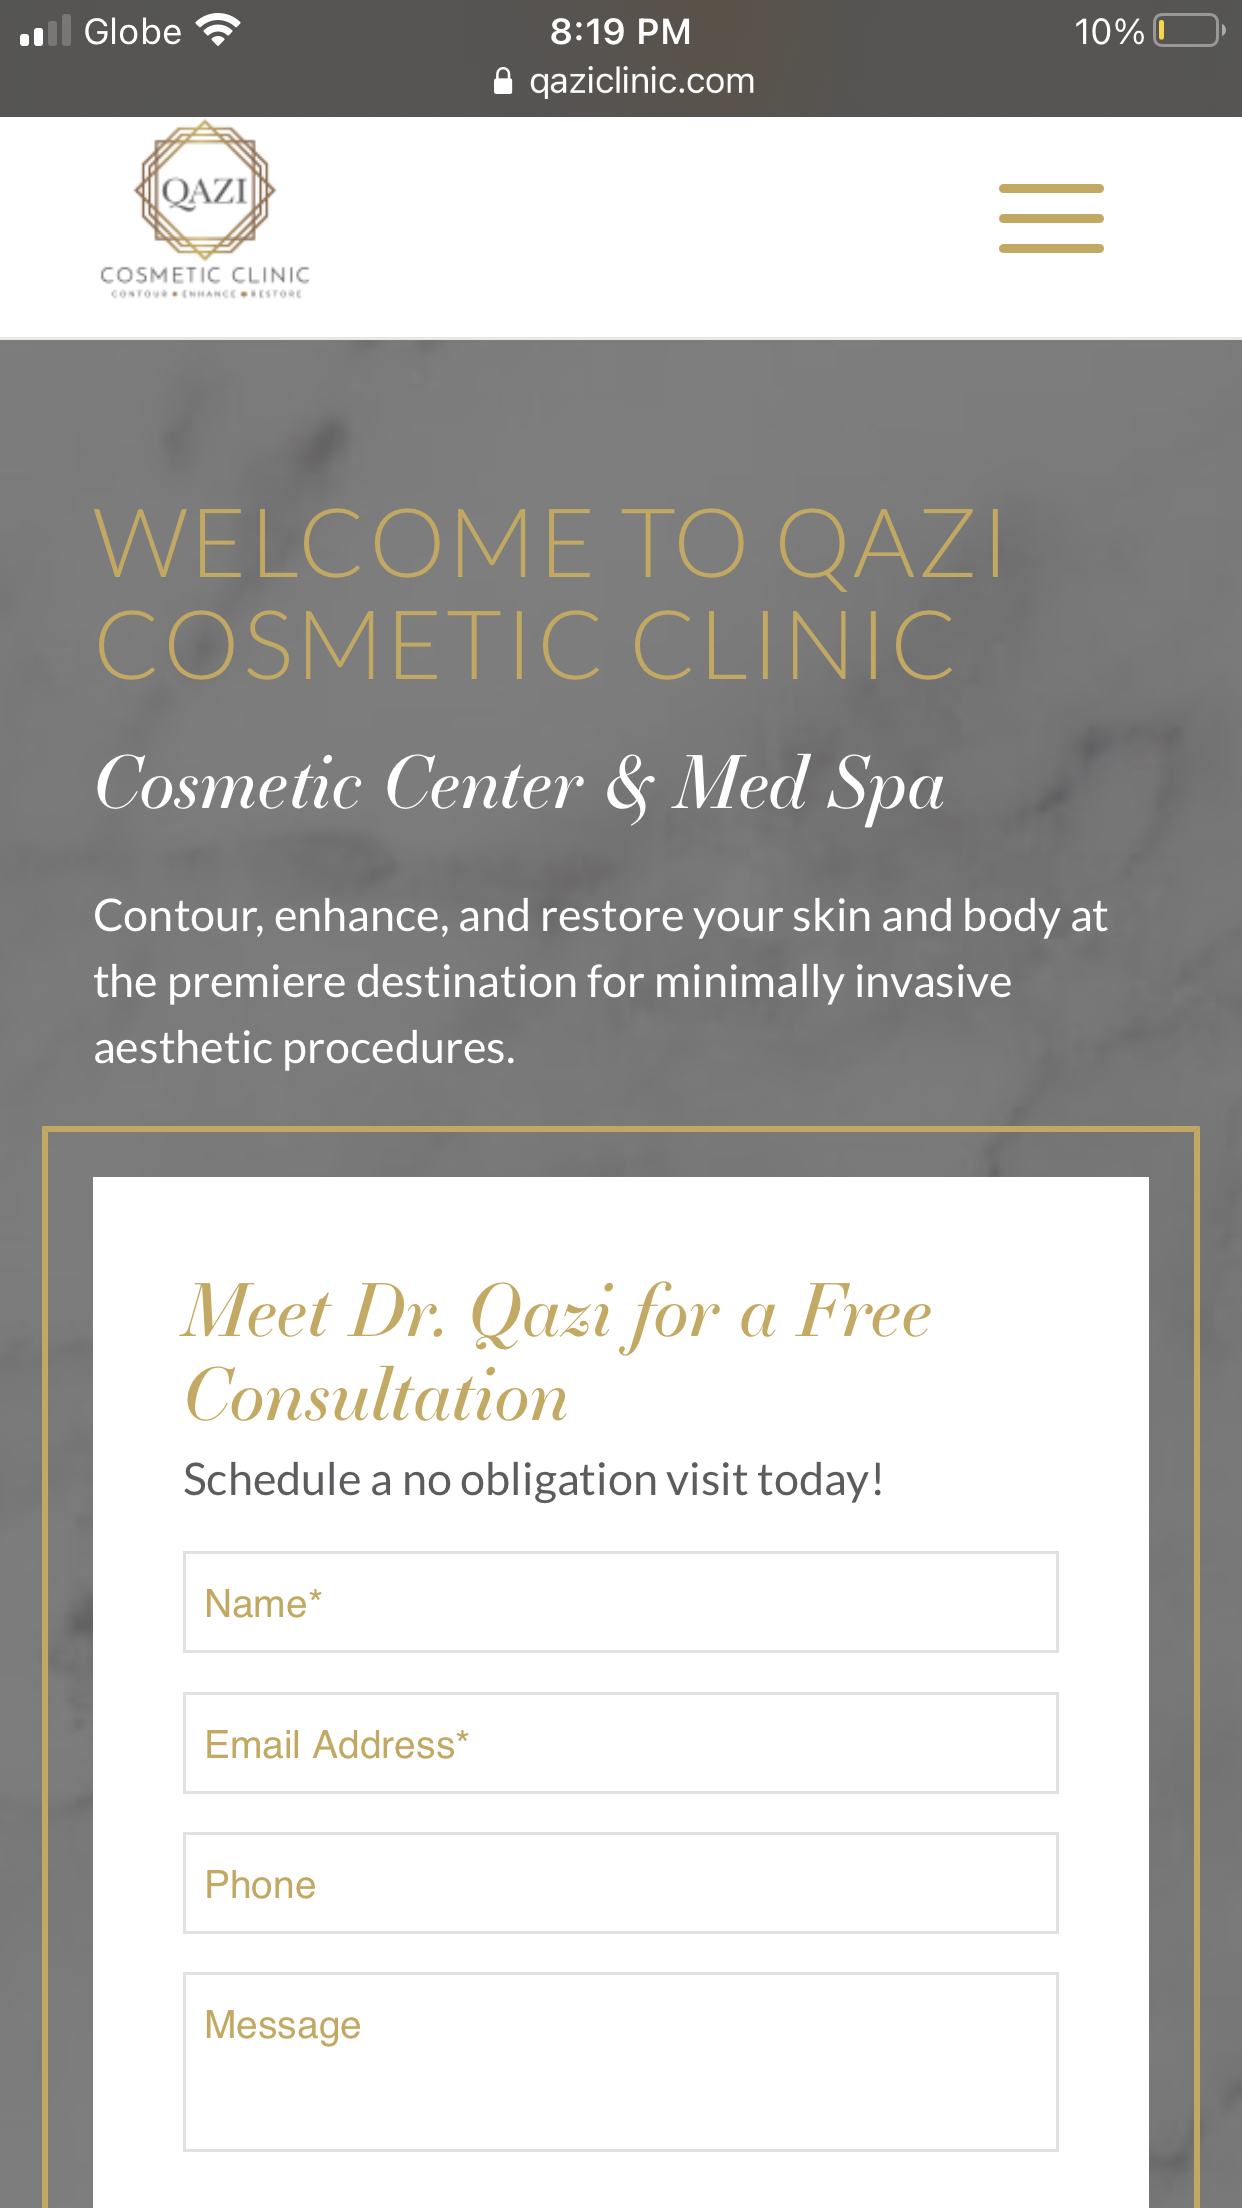 Oazi Cosmetic Clinic